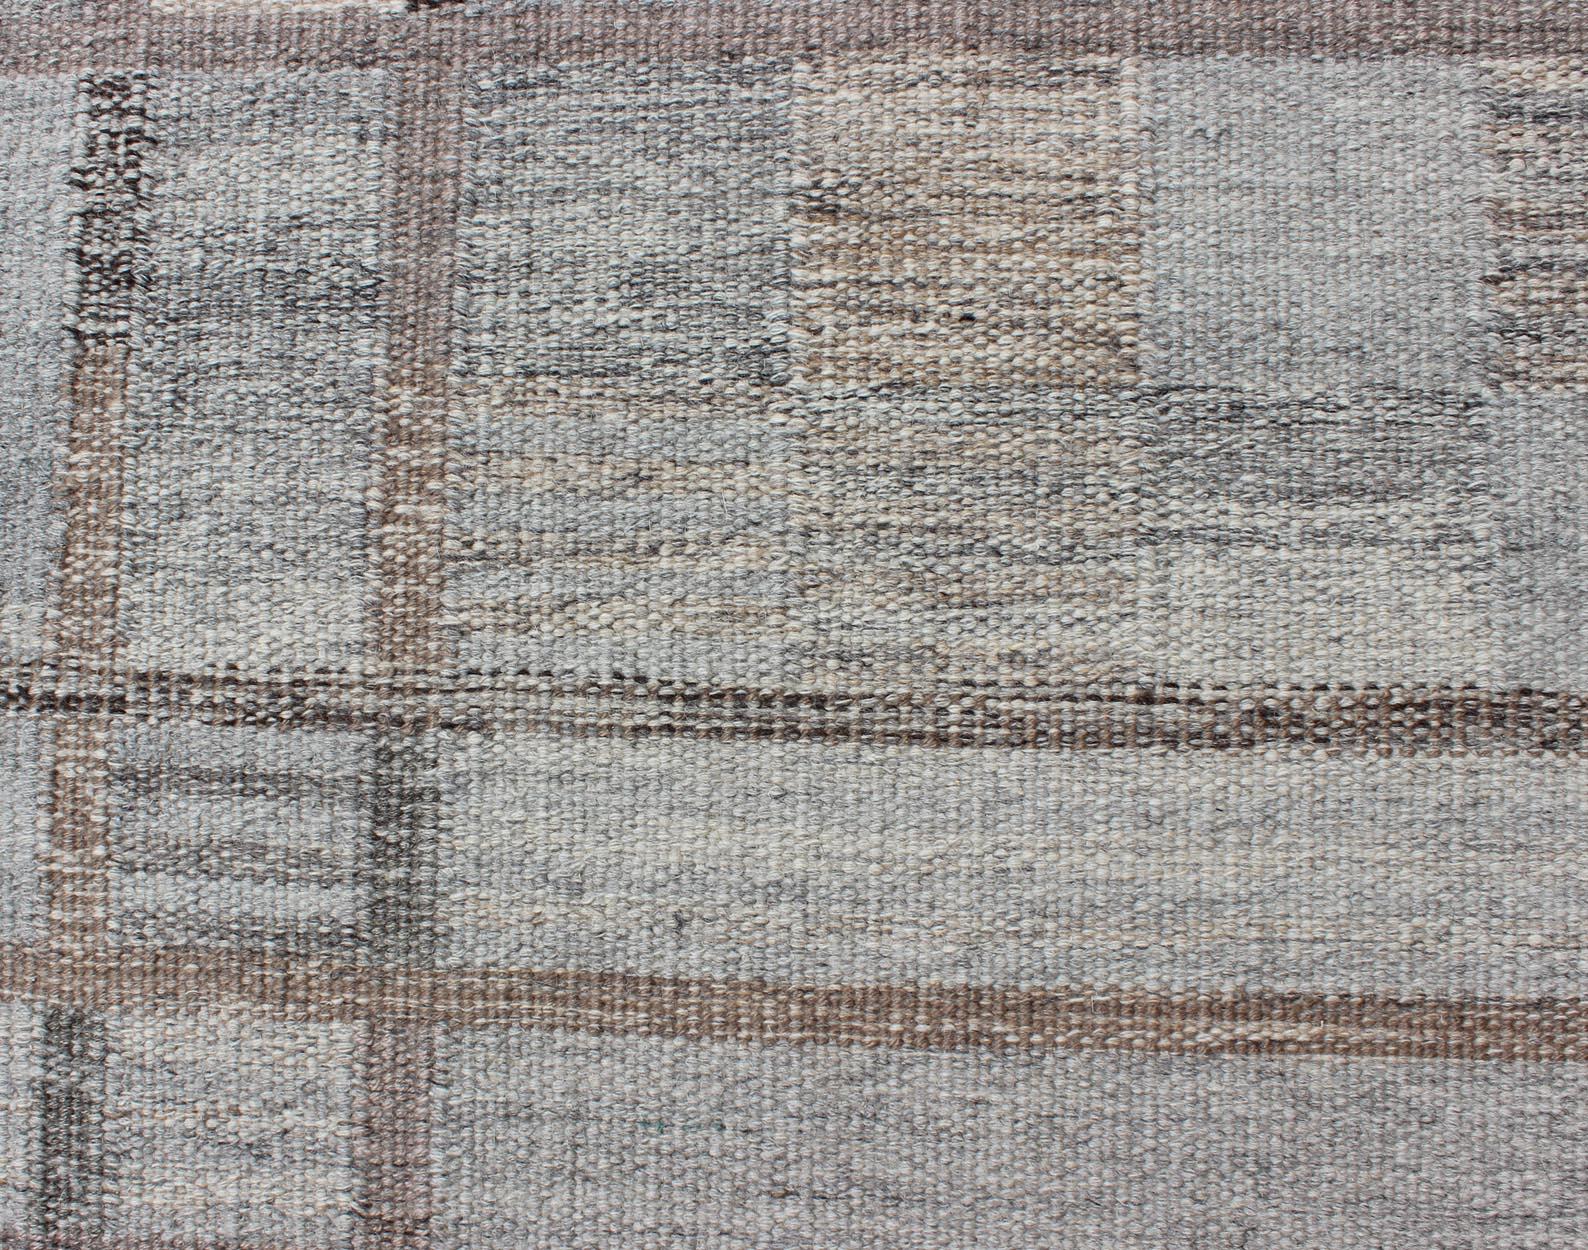 Wool Geometric Stripe Block Modern Scandinavian Flat-Weave Design Rug in Gray Tones For Sale